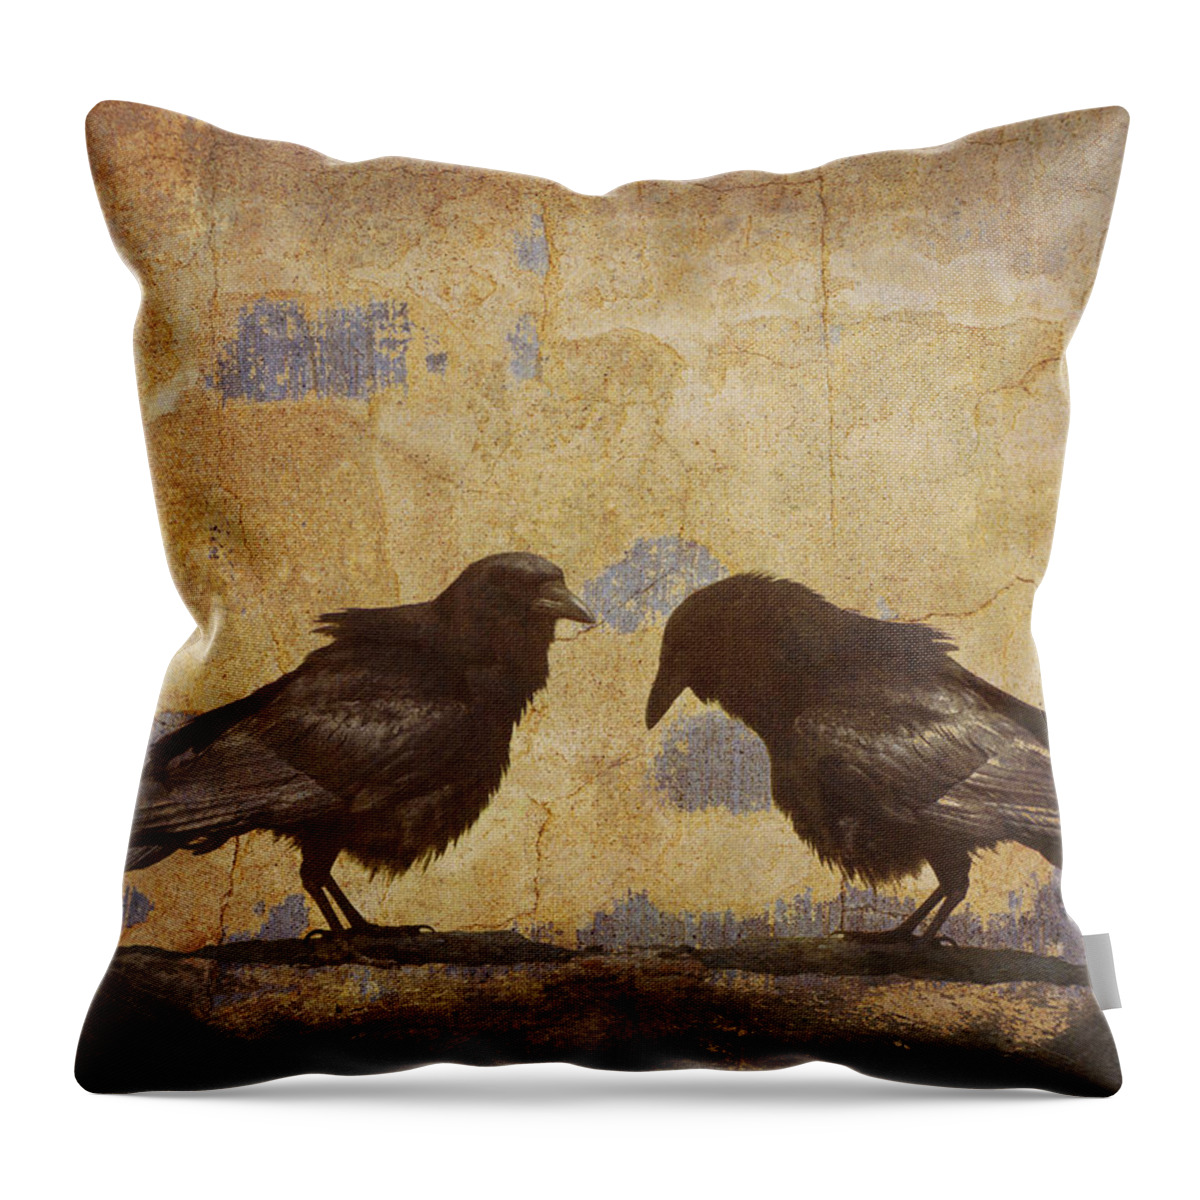 Crow Throw Pillow featuring the photograph Santa Fe Crows by Carol Leigh